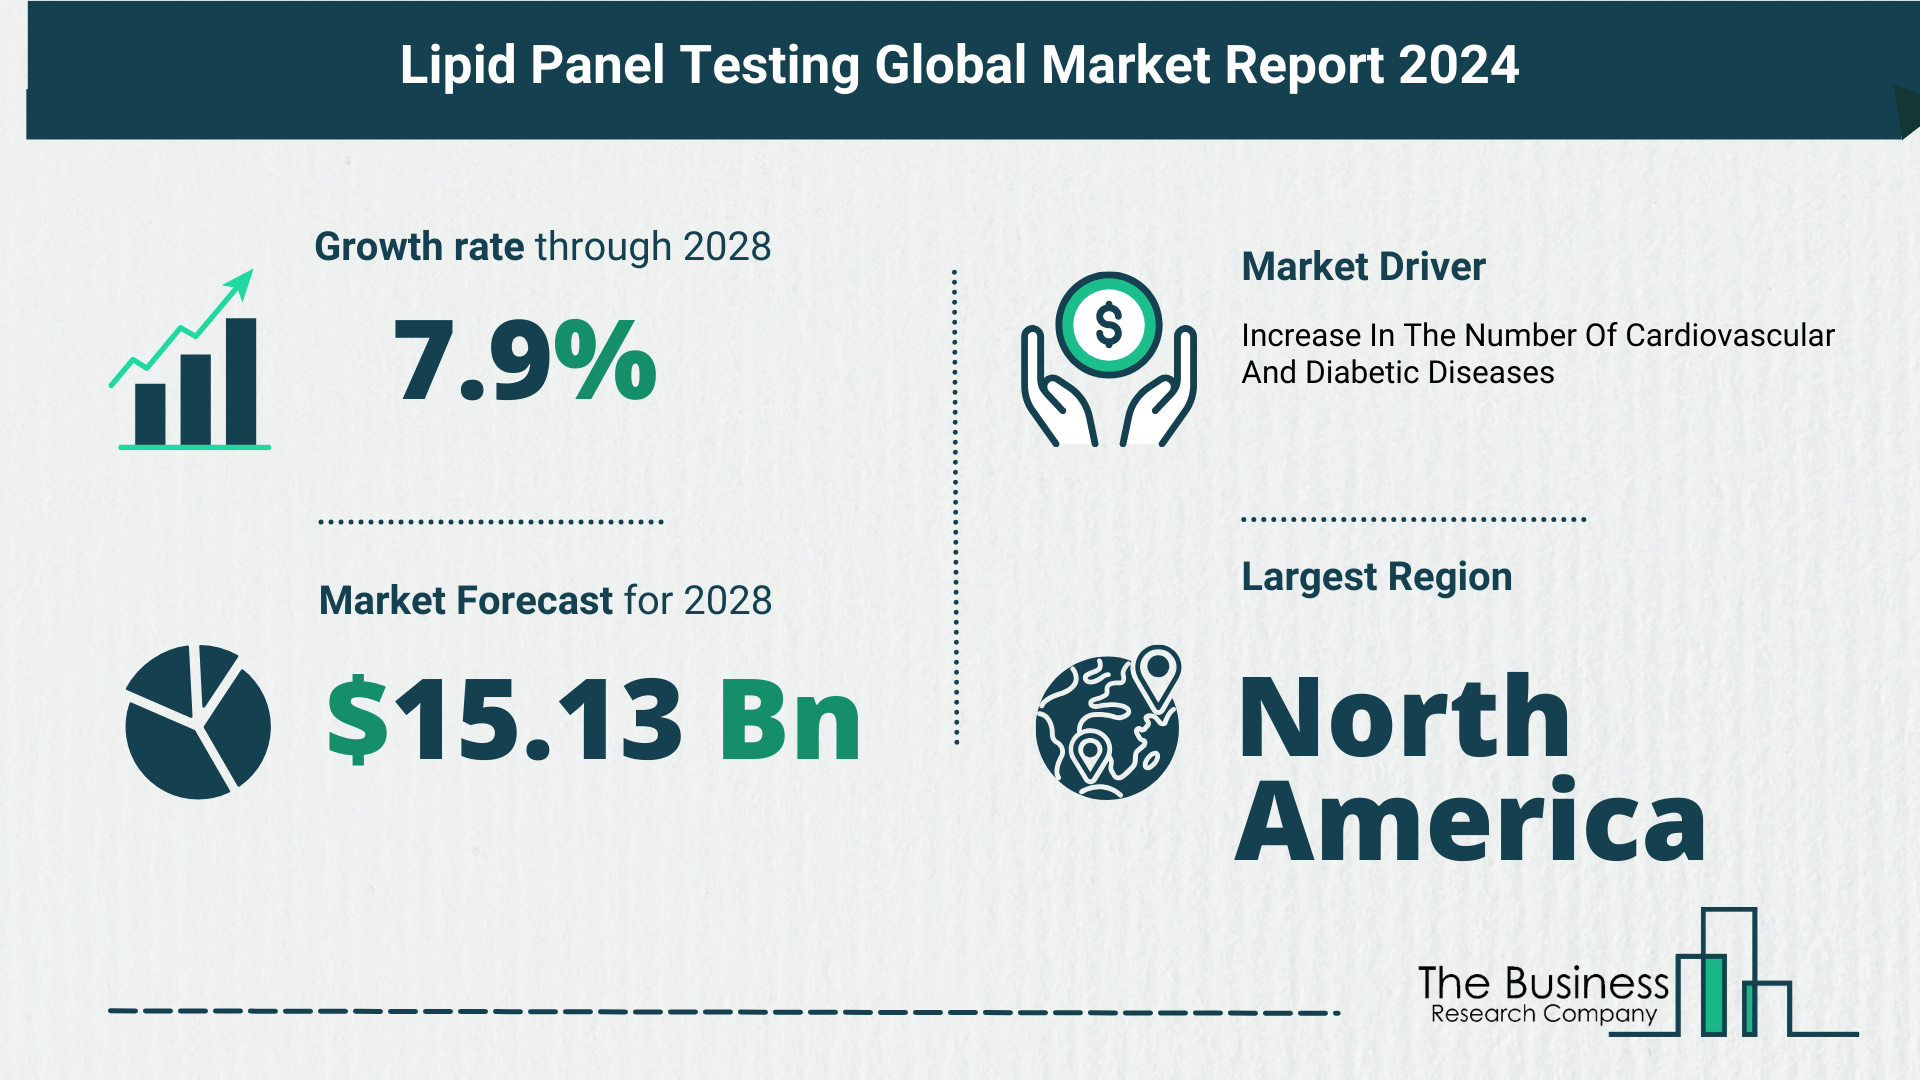 Global Lipid Panel Testing Market